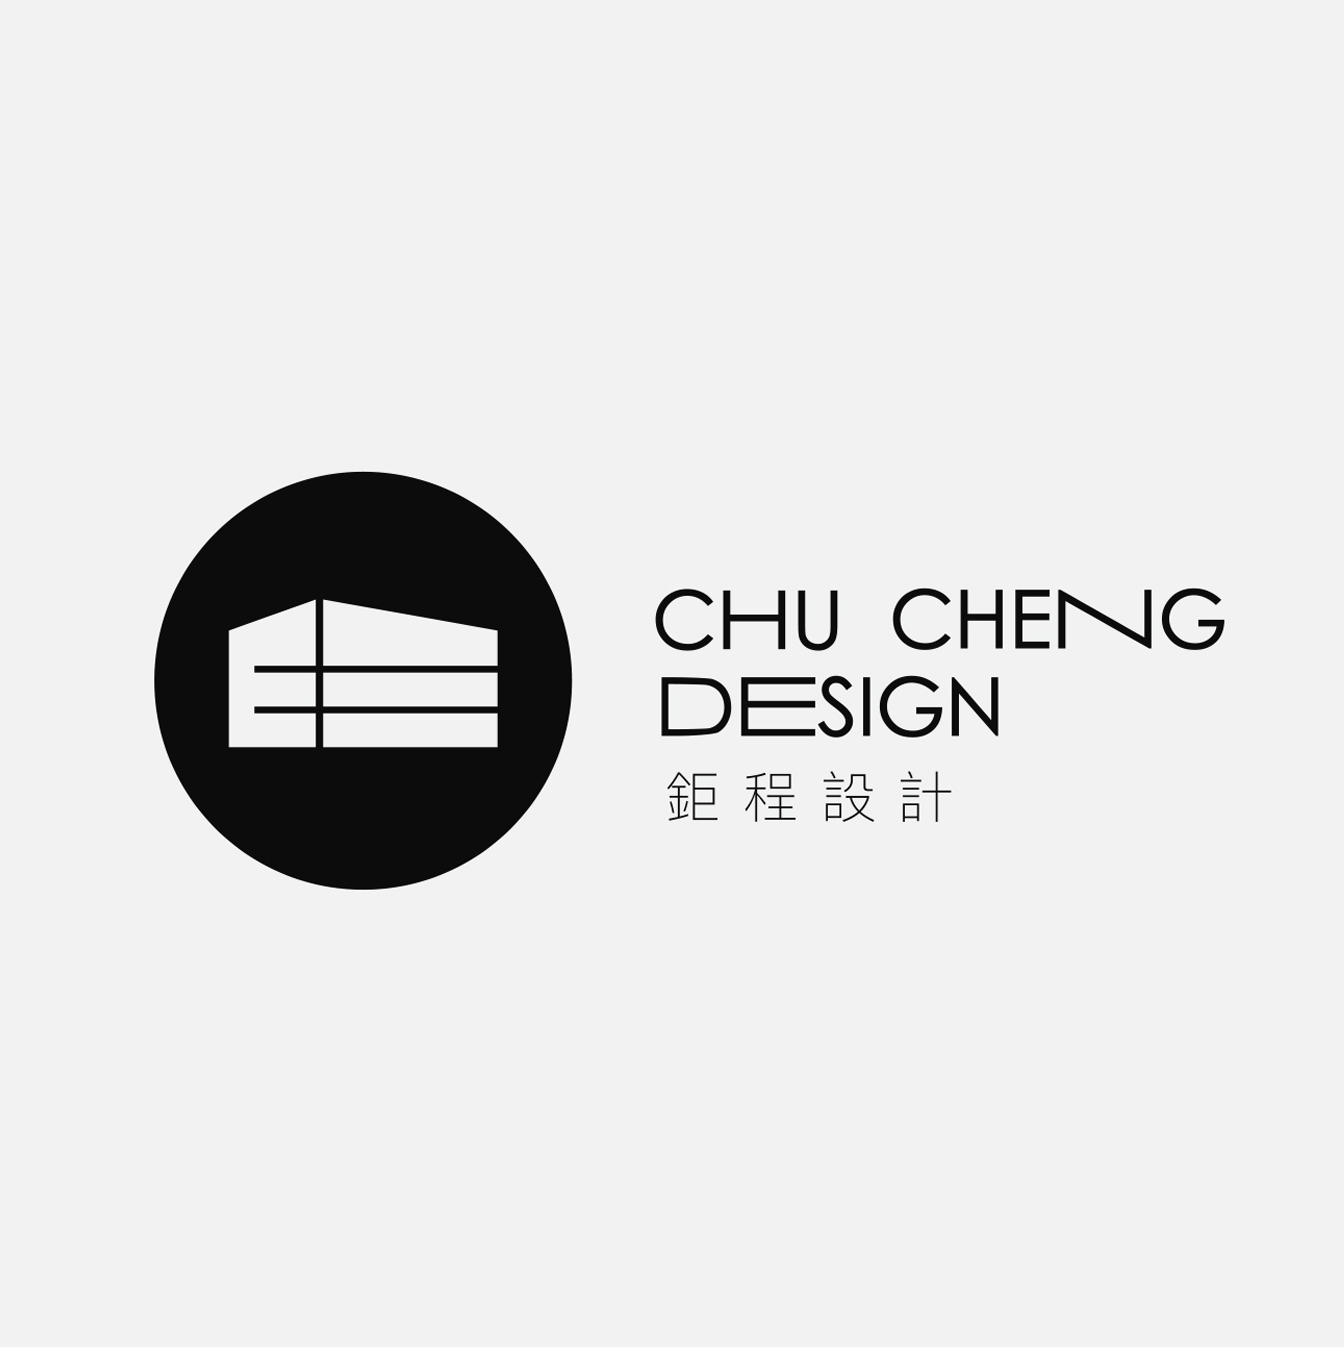 Chu Cheng design